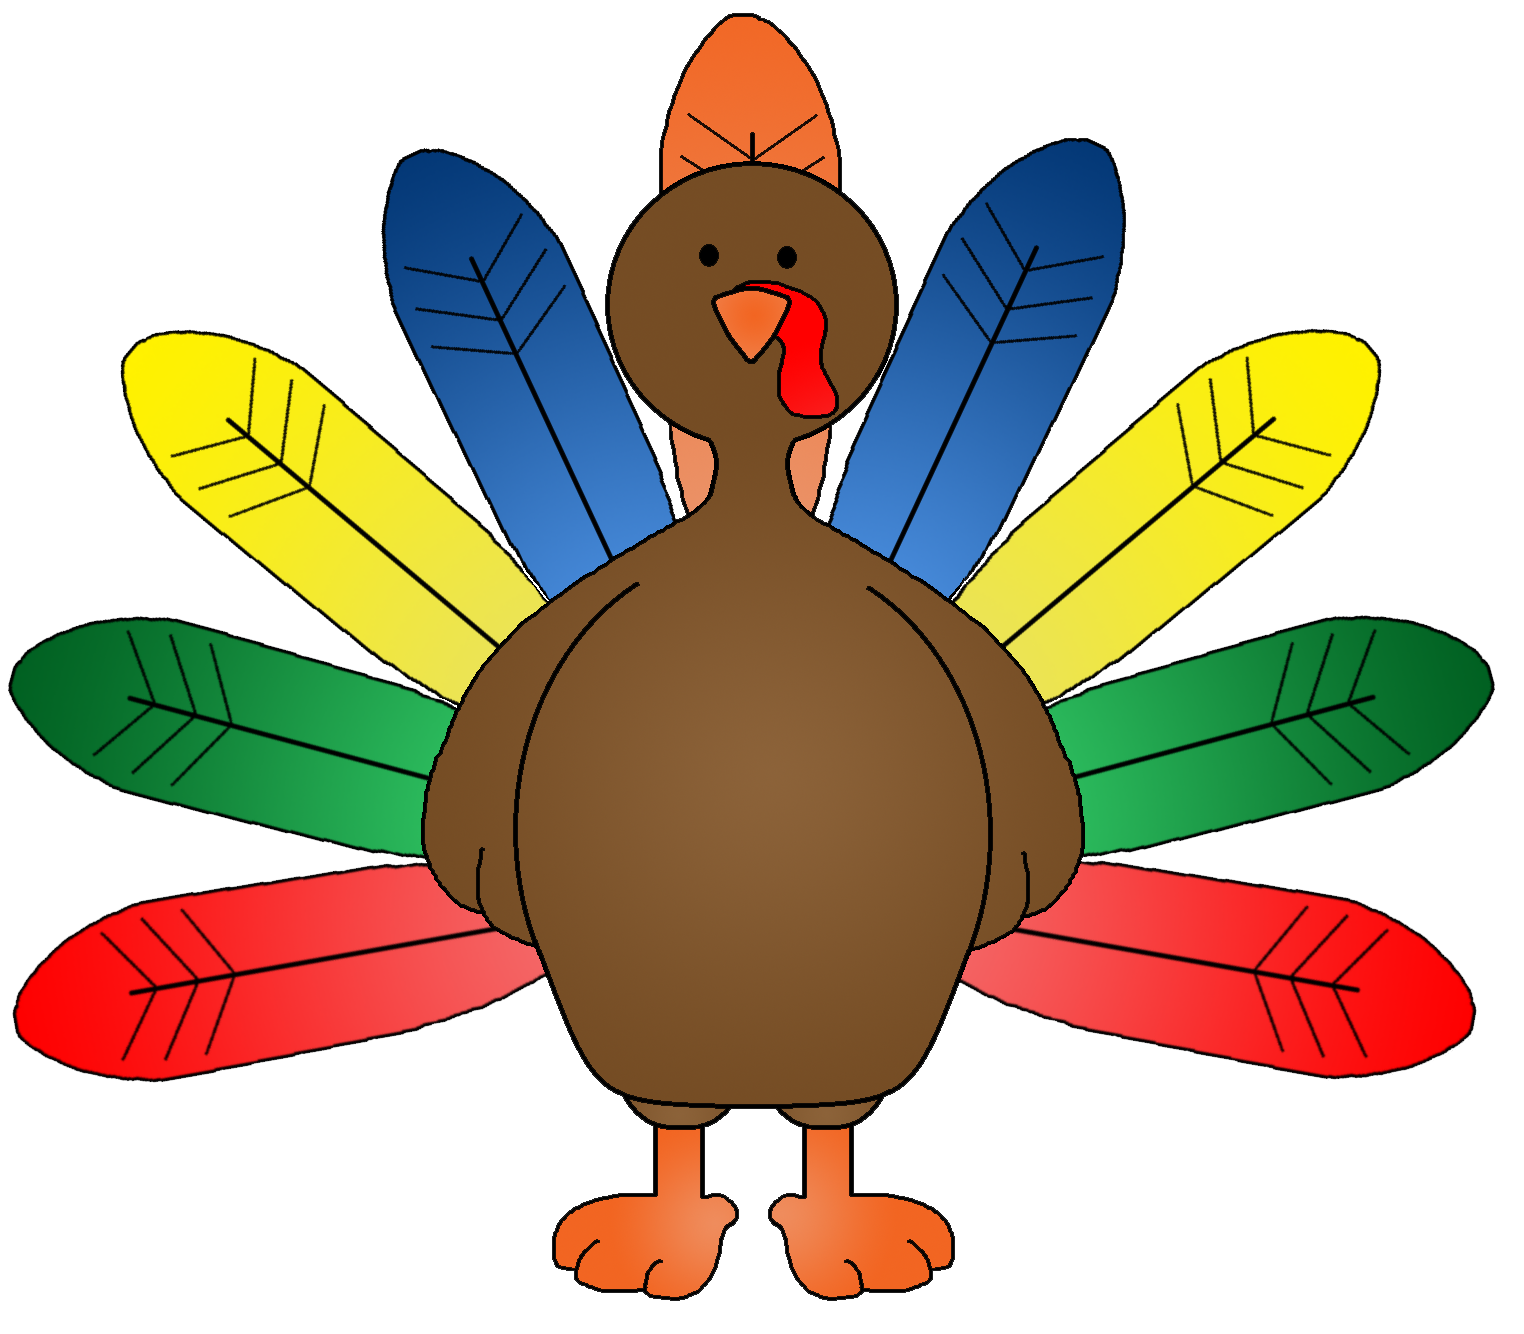 free vector turkey clipart - photo #38